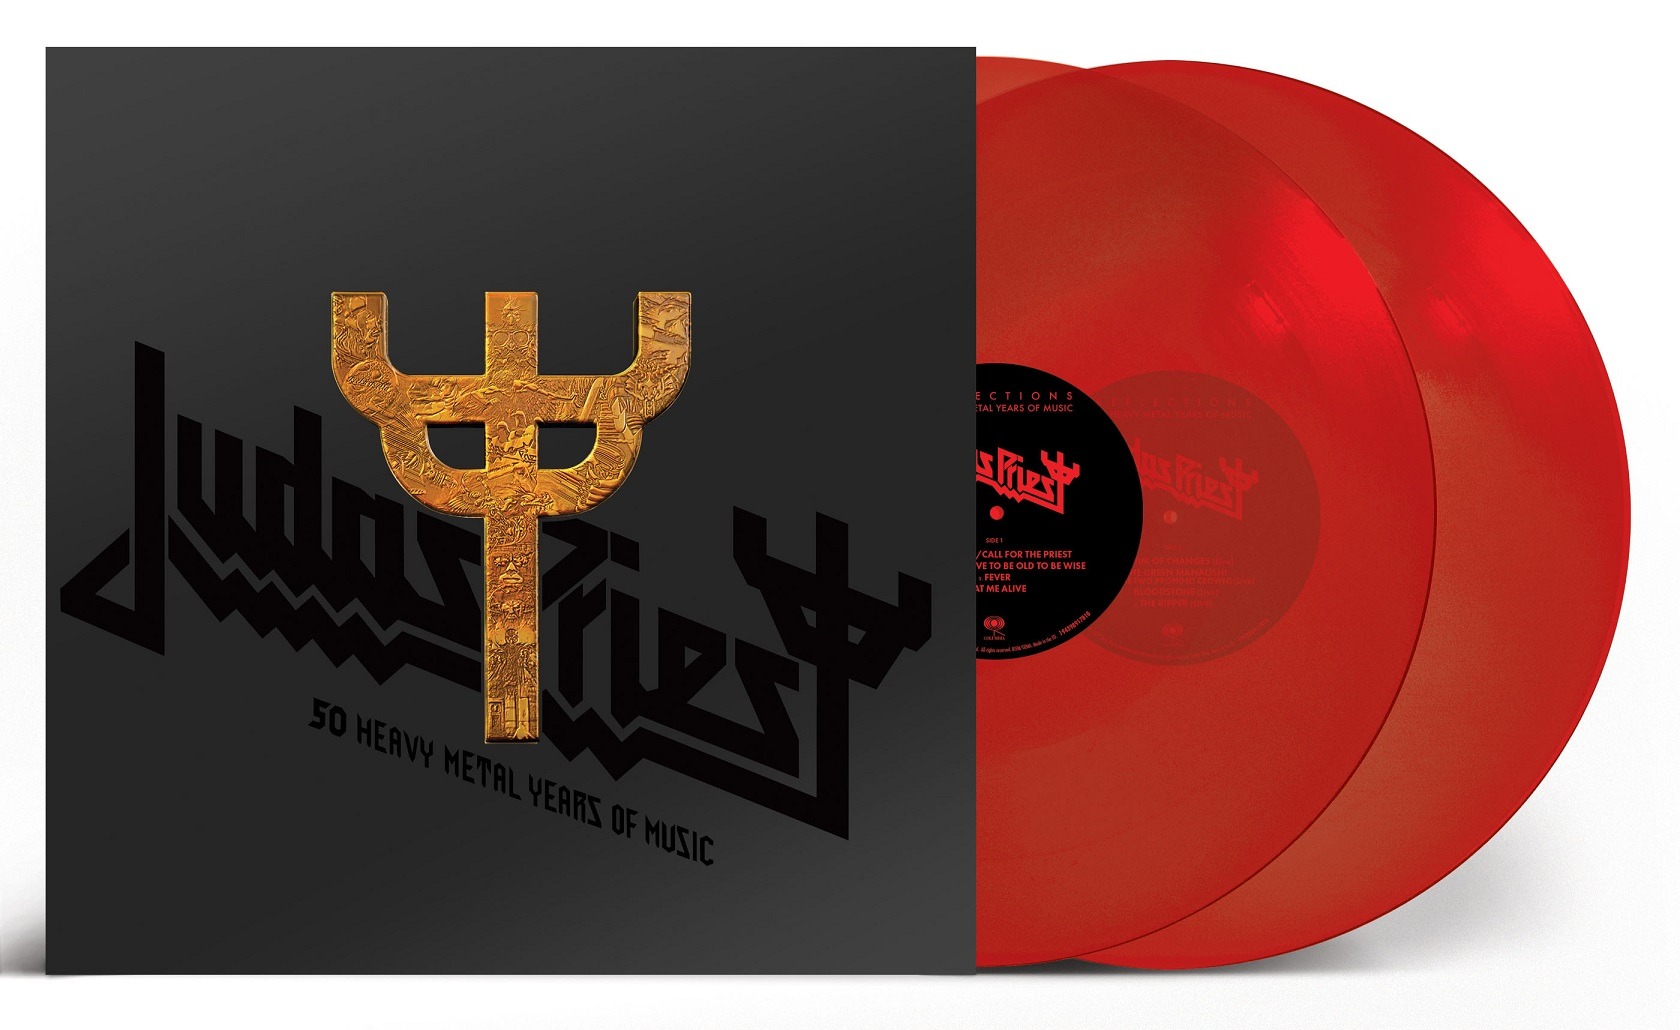 цена Judas Priest – Reflections 50 Heavy Metal Years Of Music Coloured Red Vinyl (2 LP)